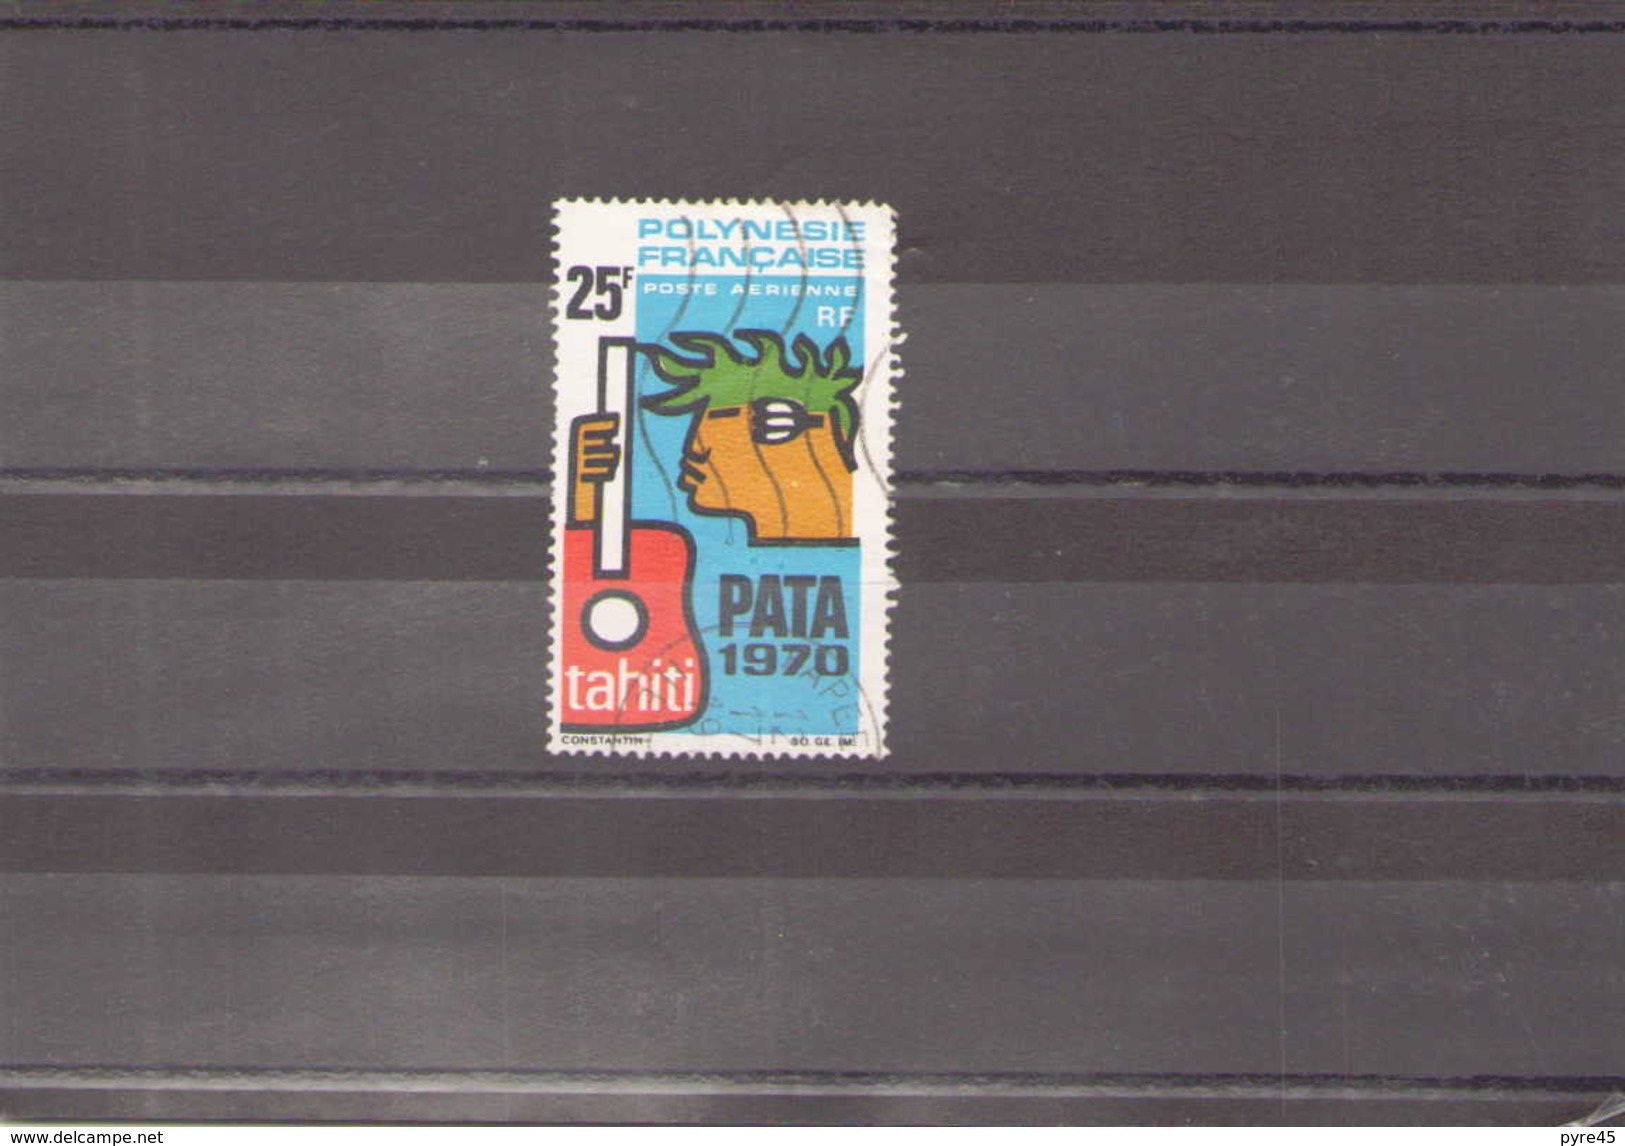 Polynesie  1969 Poste Aerienne N° 28 Oblitere - Oblitérés